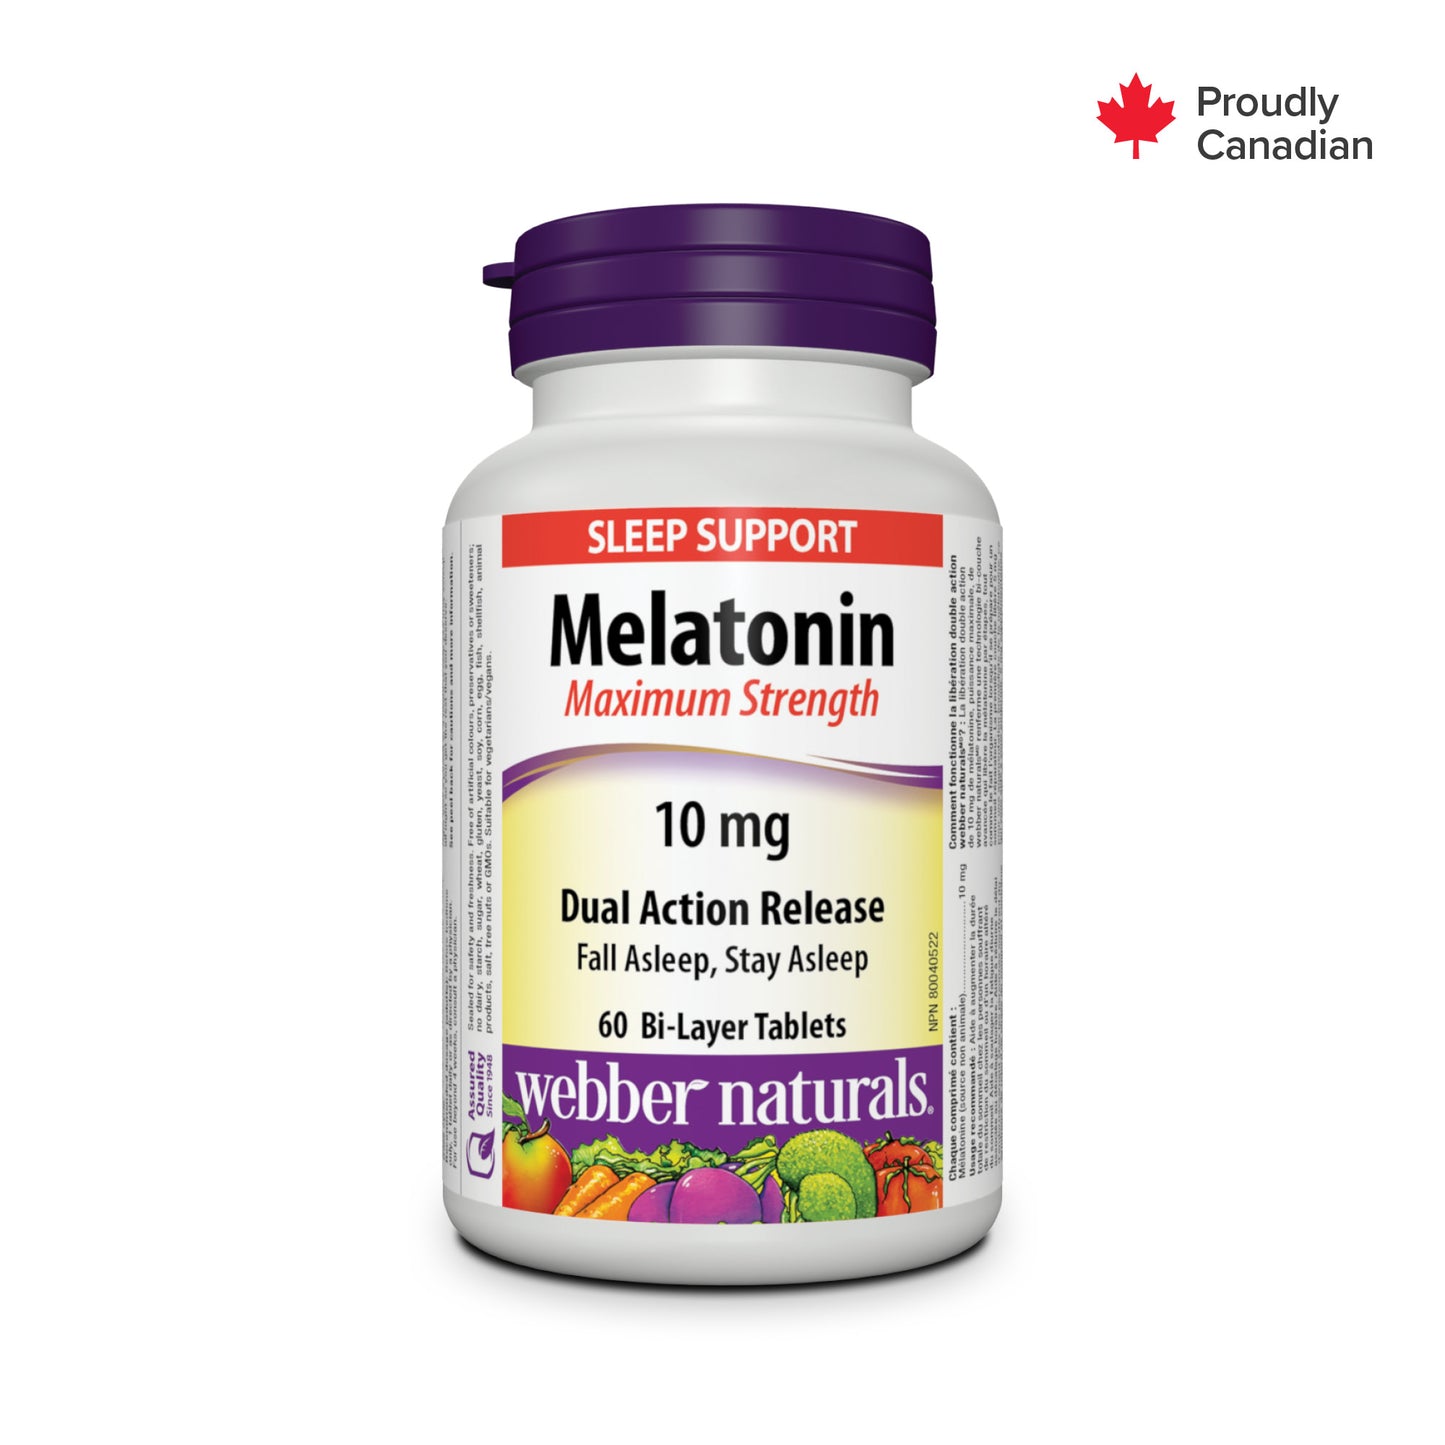 Melatonin Maximum Strength Dual Action Release 10 mg for Webber Naturals|v|hi-res|WN3603